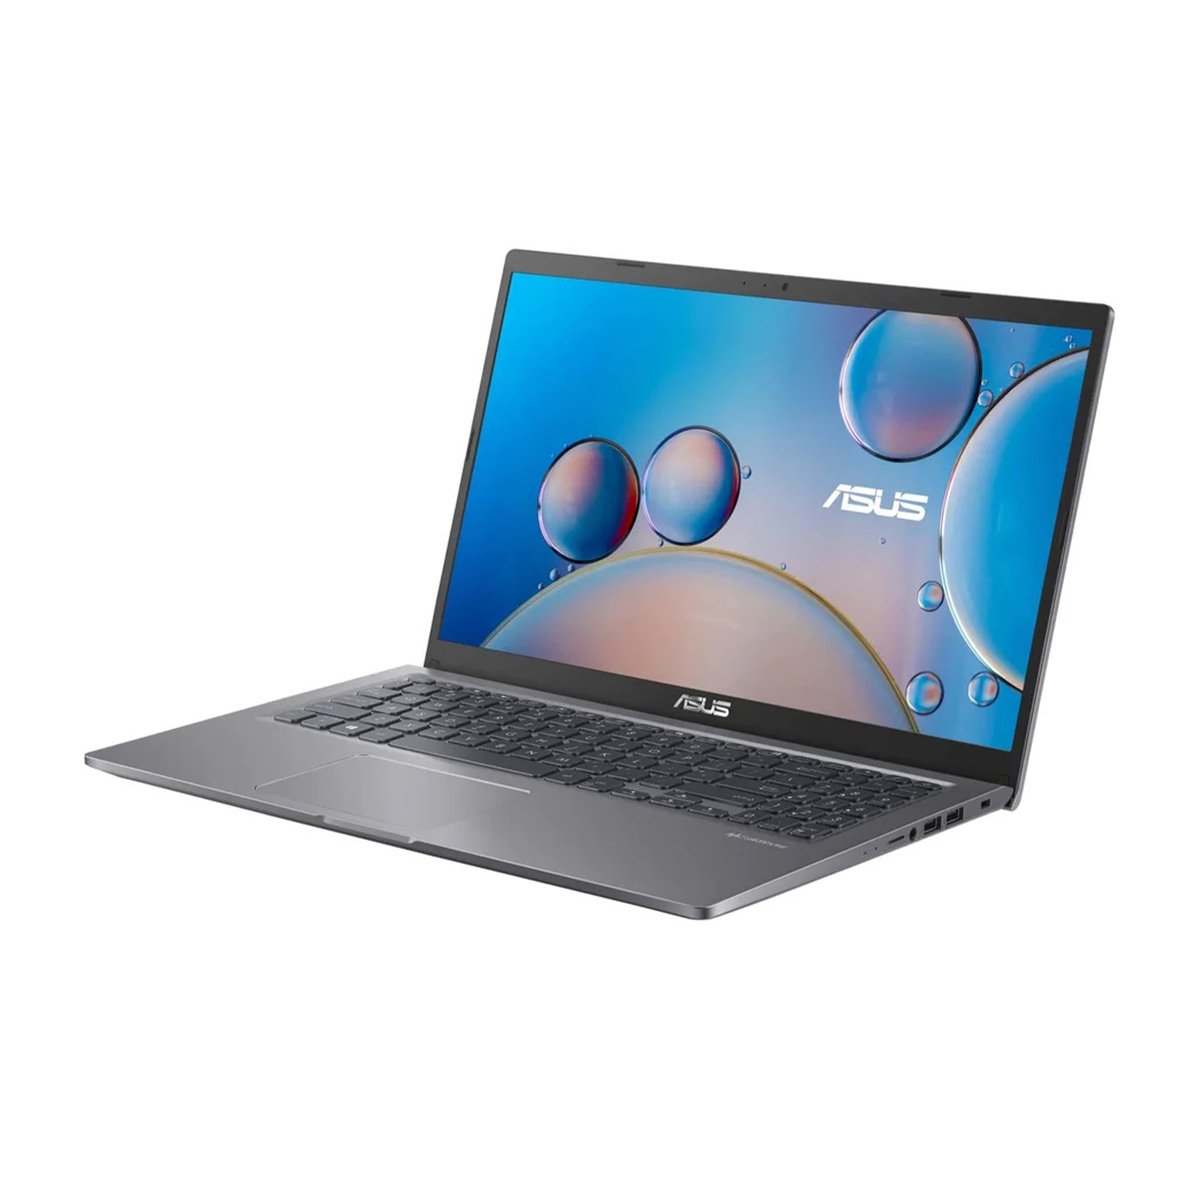 Asus Notebook X515MA-BR062T,Intel Celeron,4GB RAM,256GB SSD,Intel HD Graphices,15.6"HD LED,Windows 10